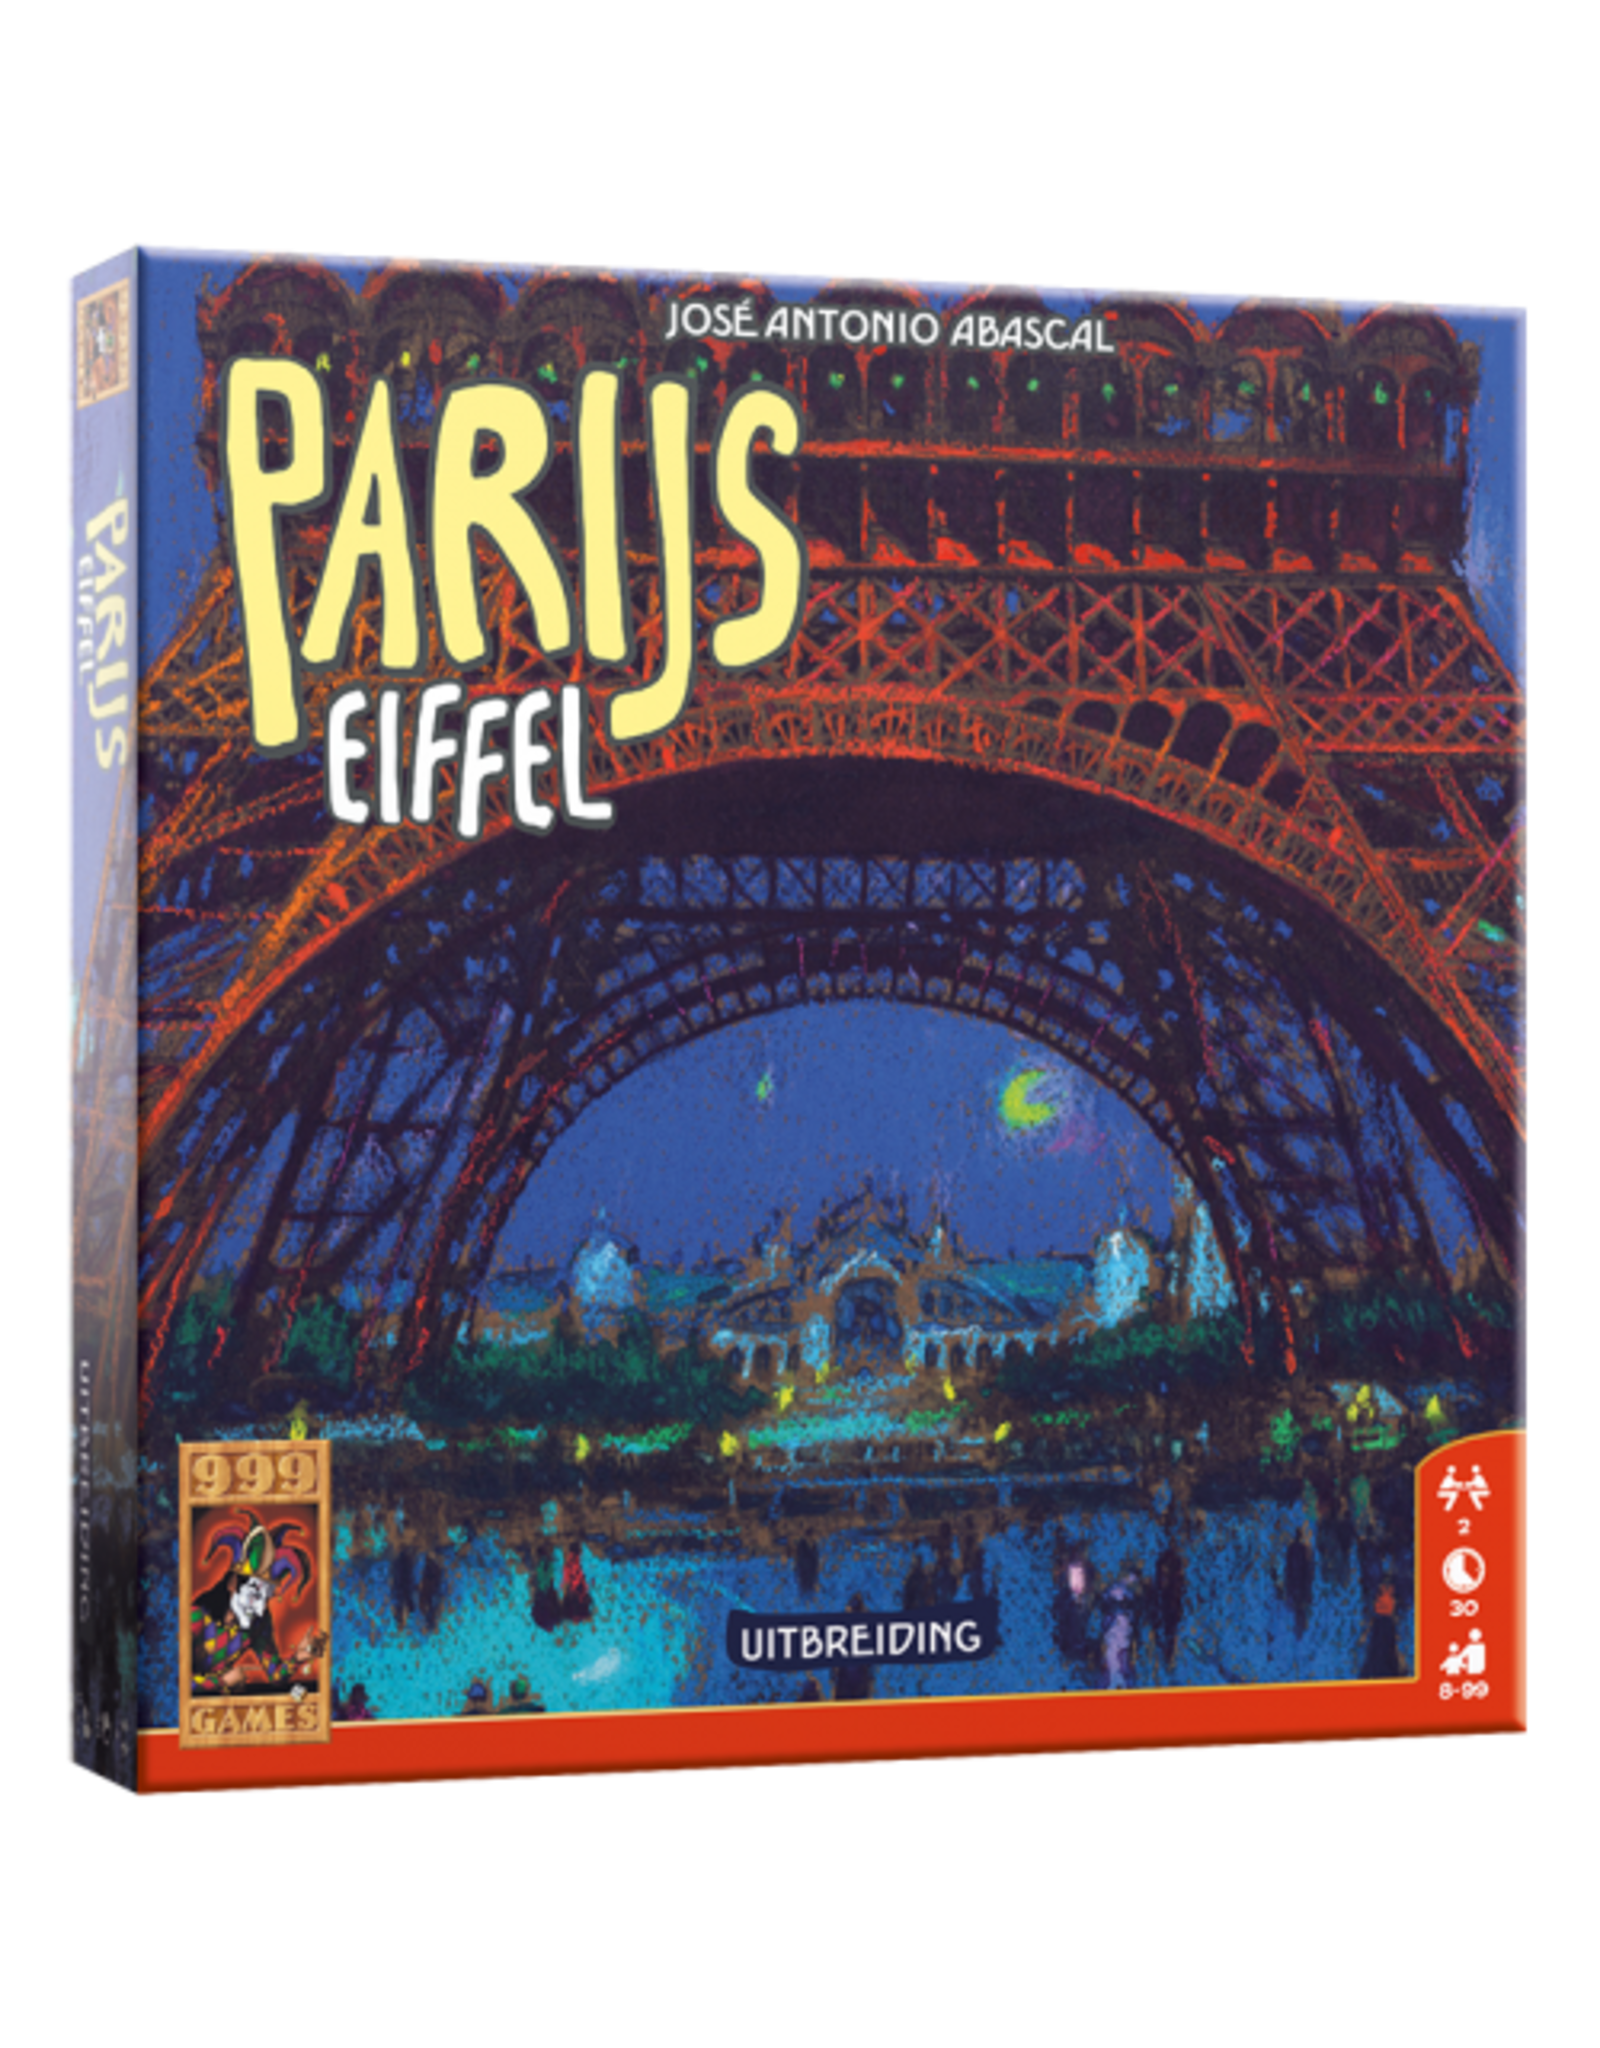 999 Games Parijs - Eiffel